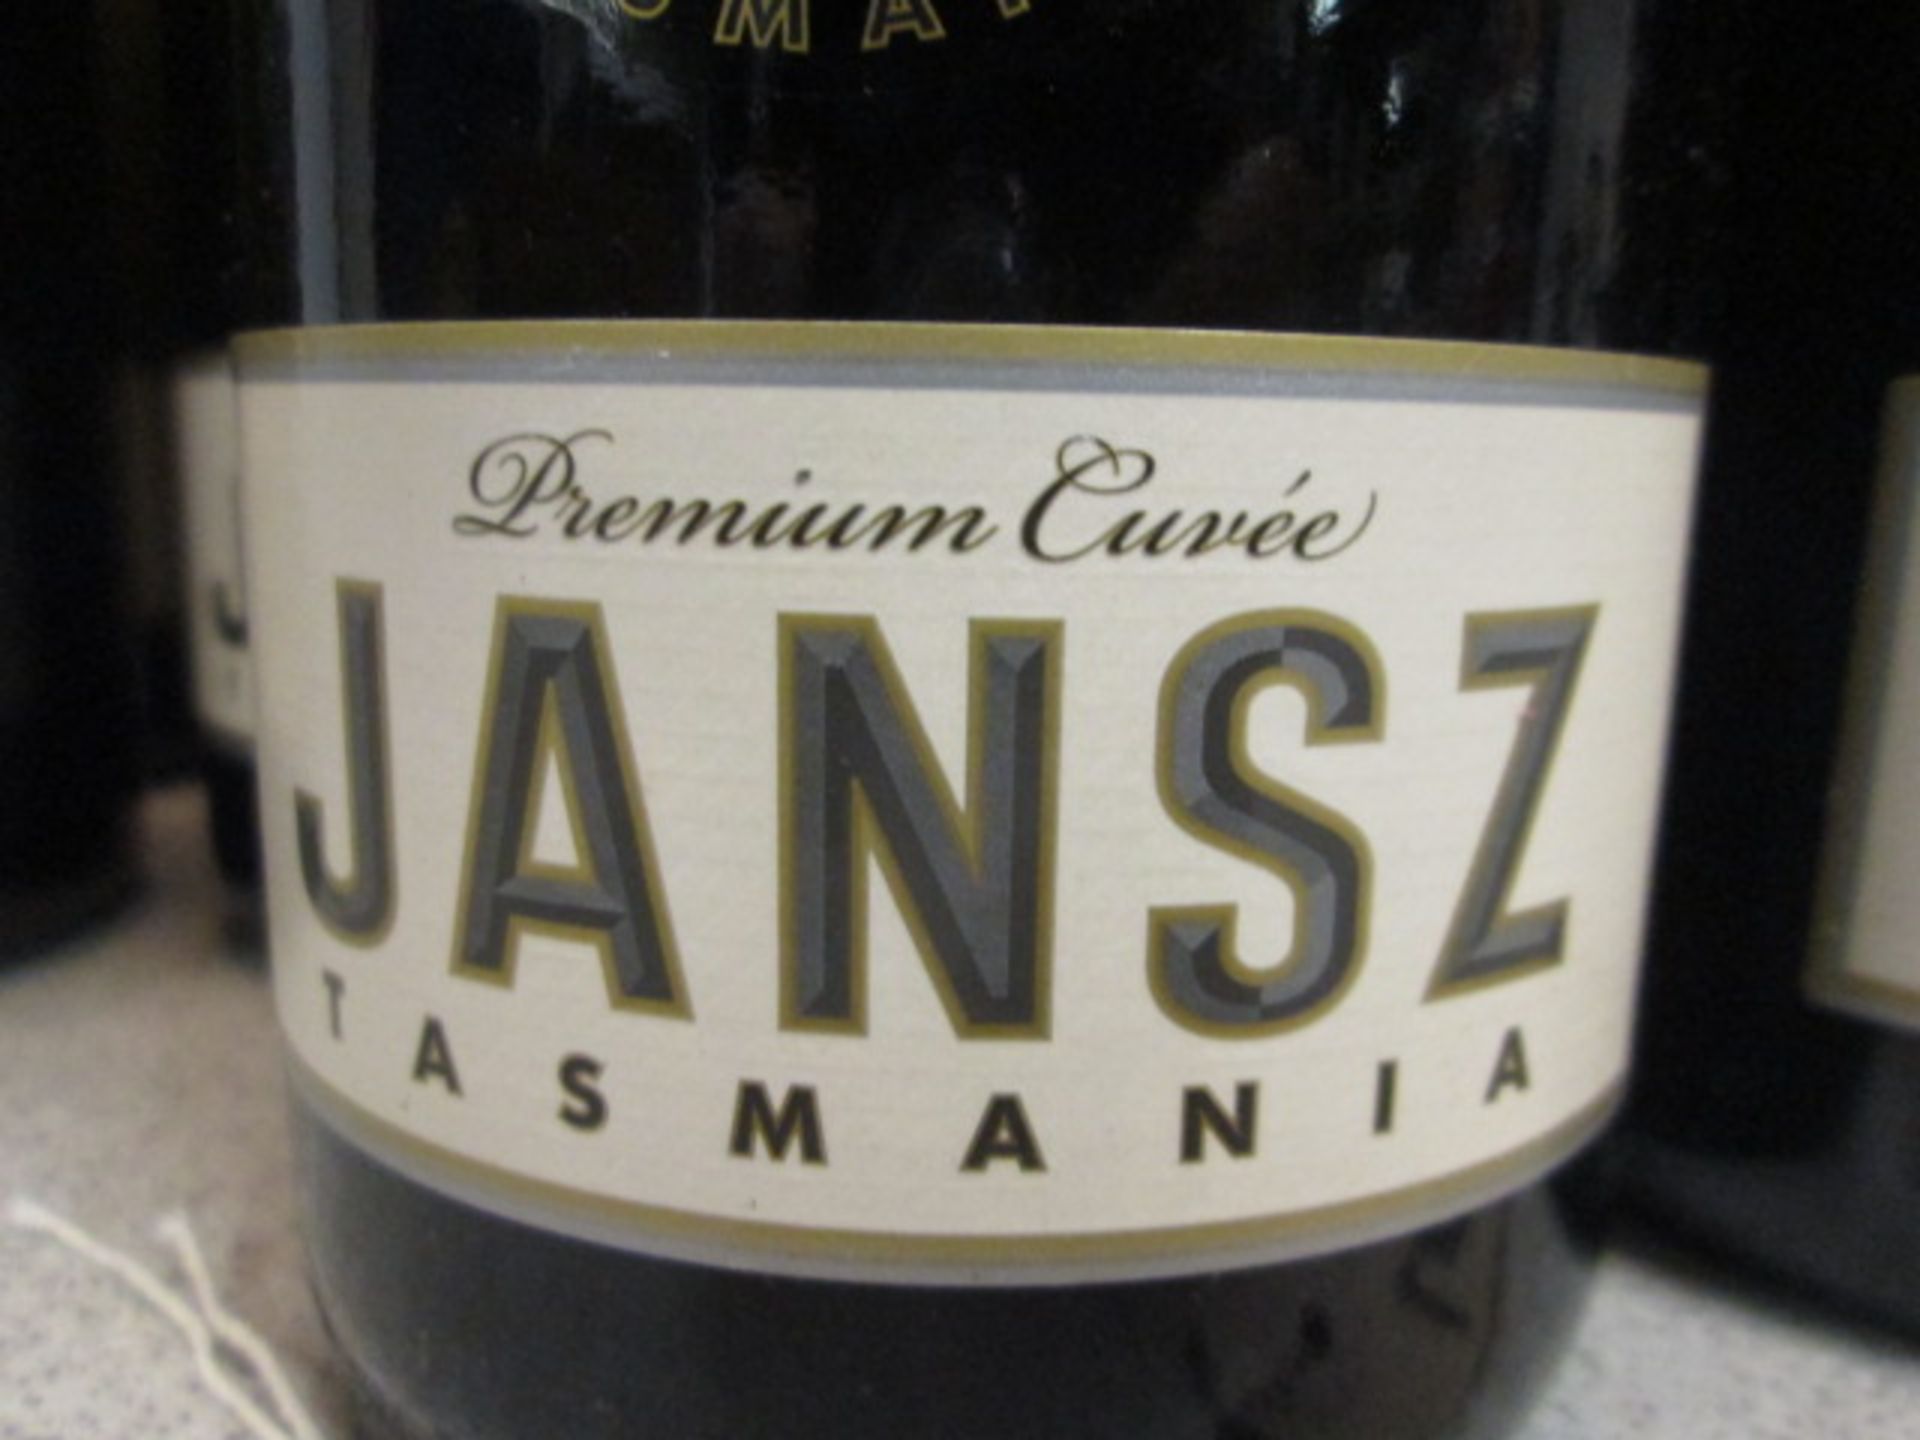 17 x Bottles of Jansz Tasmania (7 Premium Rose, 10 Cuvee) - Image 2 of 3